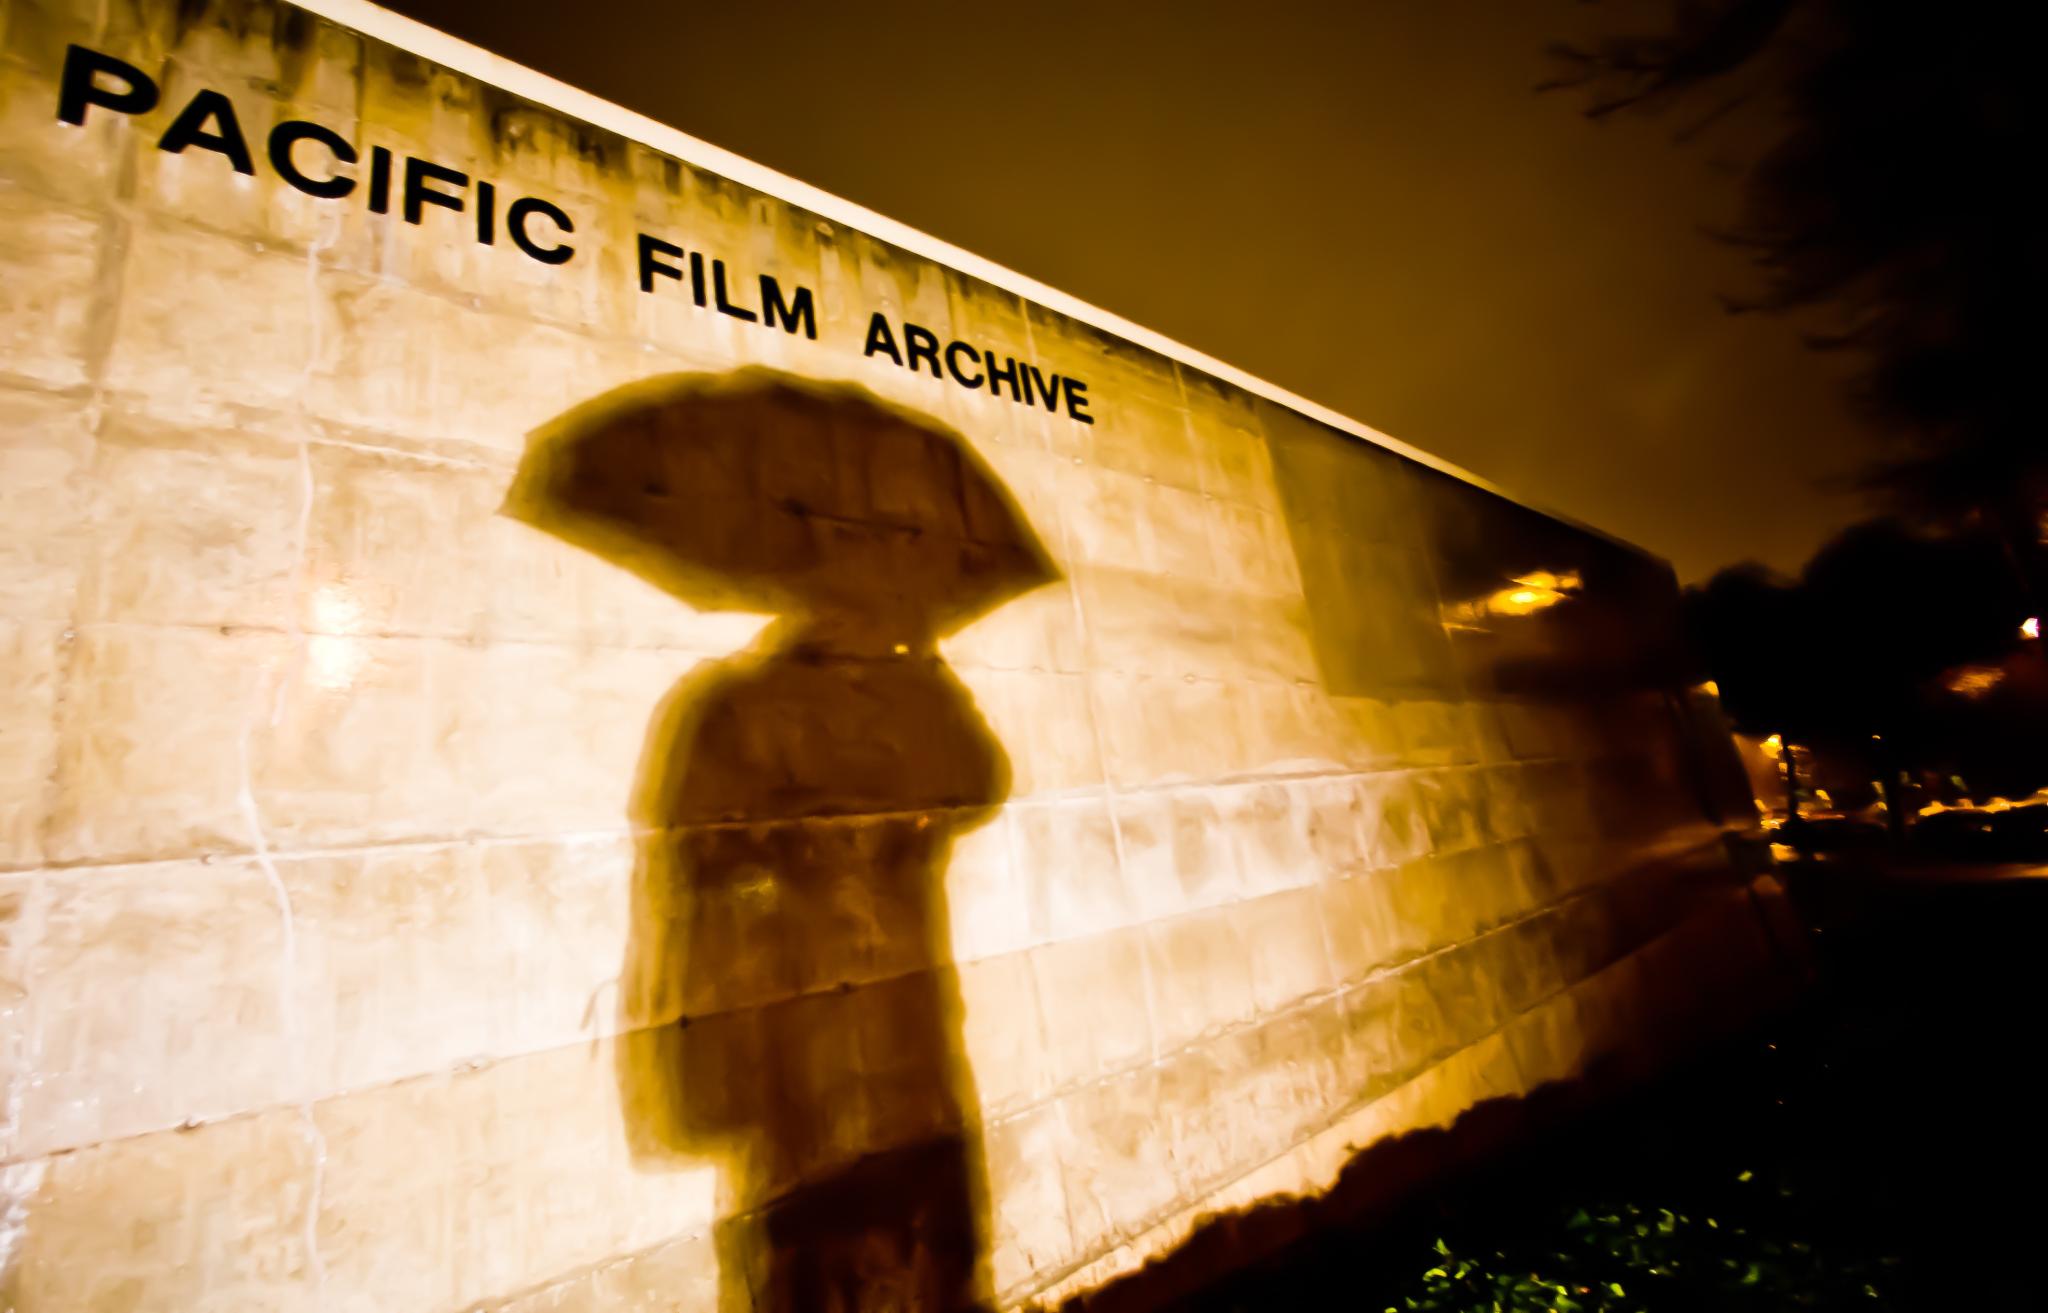 Pacific Film Archive